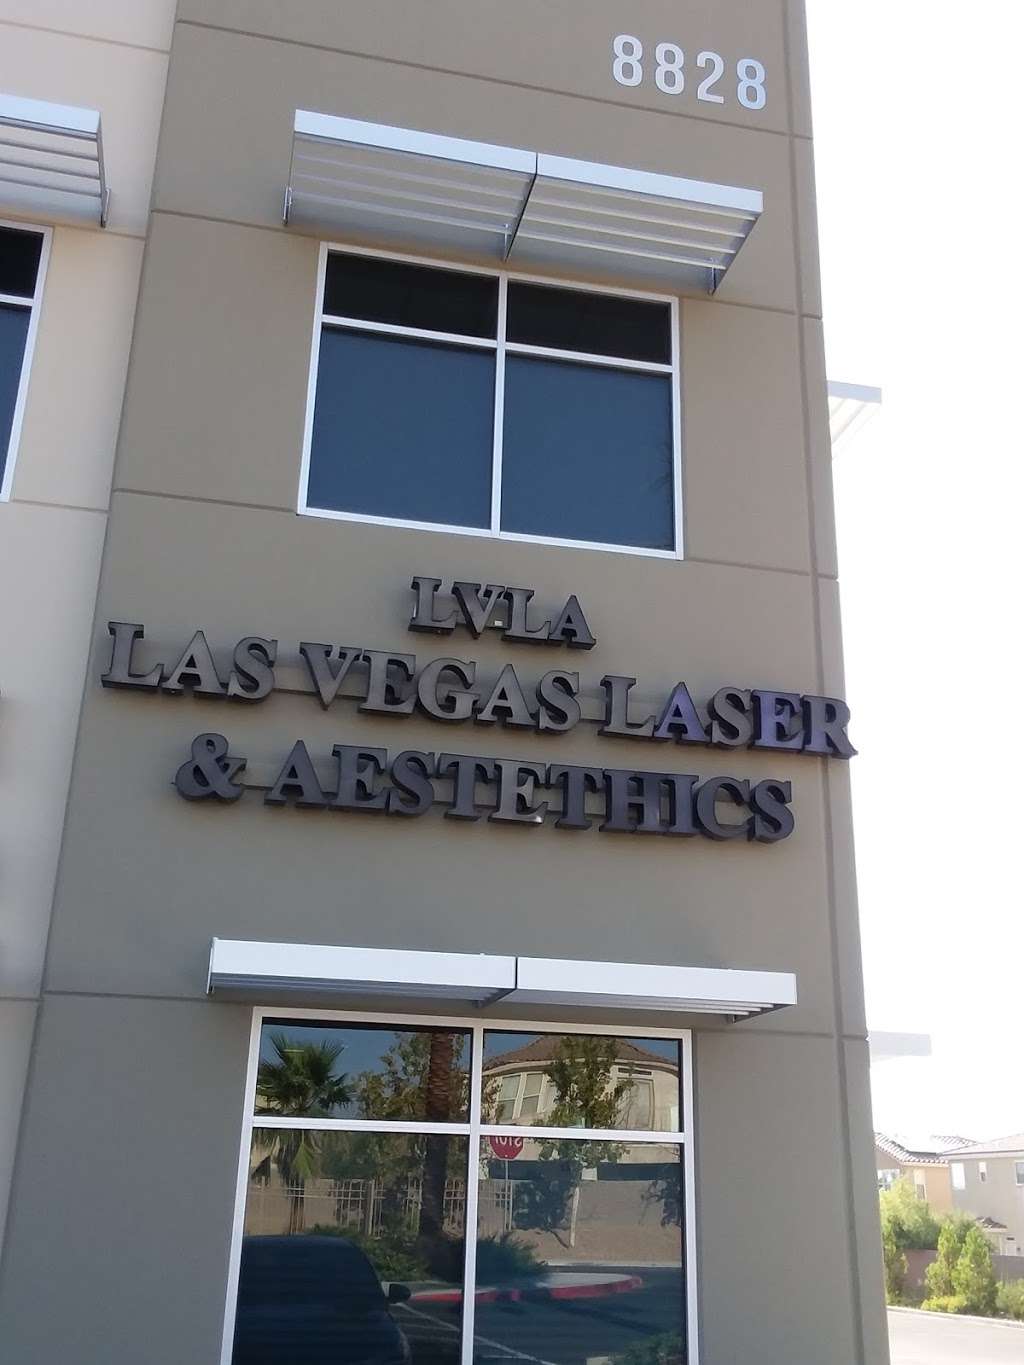 Las Vegas Laser & Aesthetics | Photo 5 of 9 | Address: 8828 Mohawk St #201, Las Vegas, NV 89139, USA | Phone: (702) 227-6197